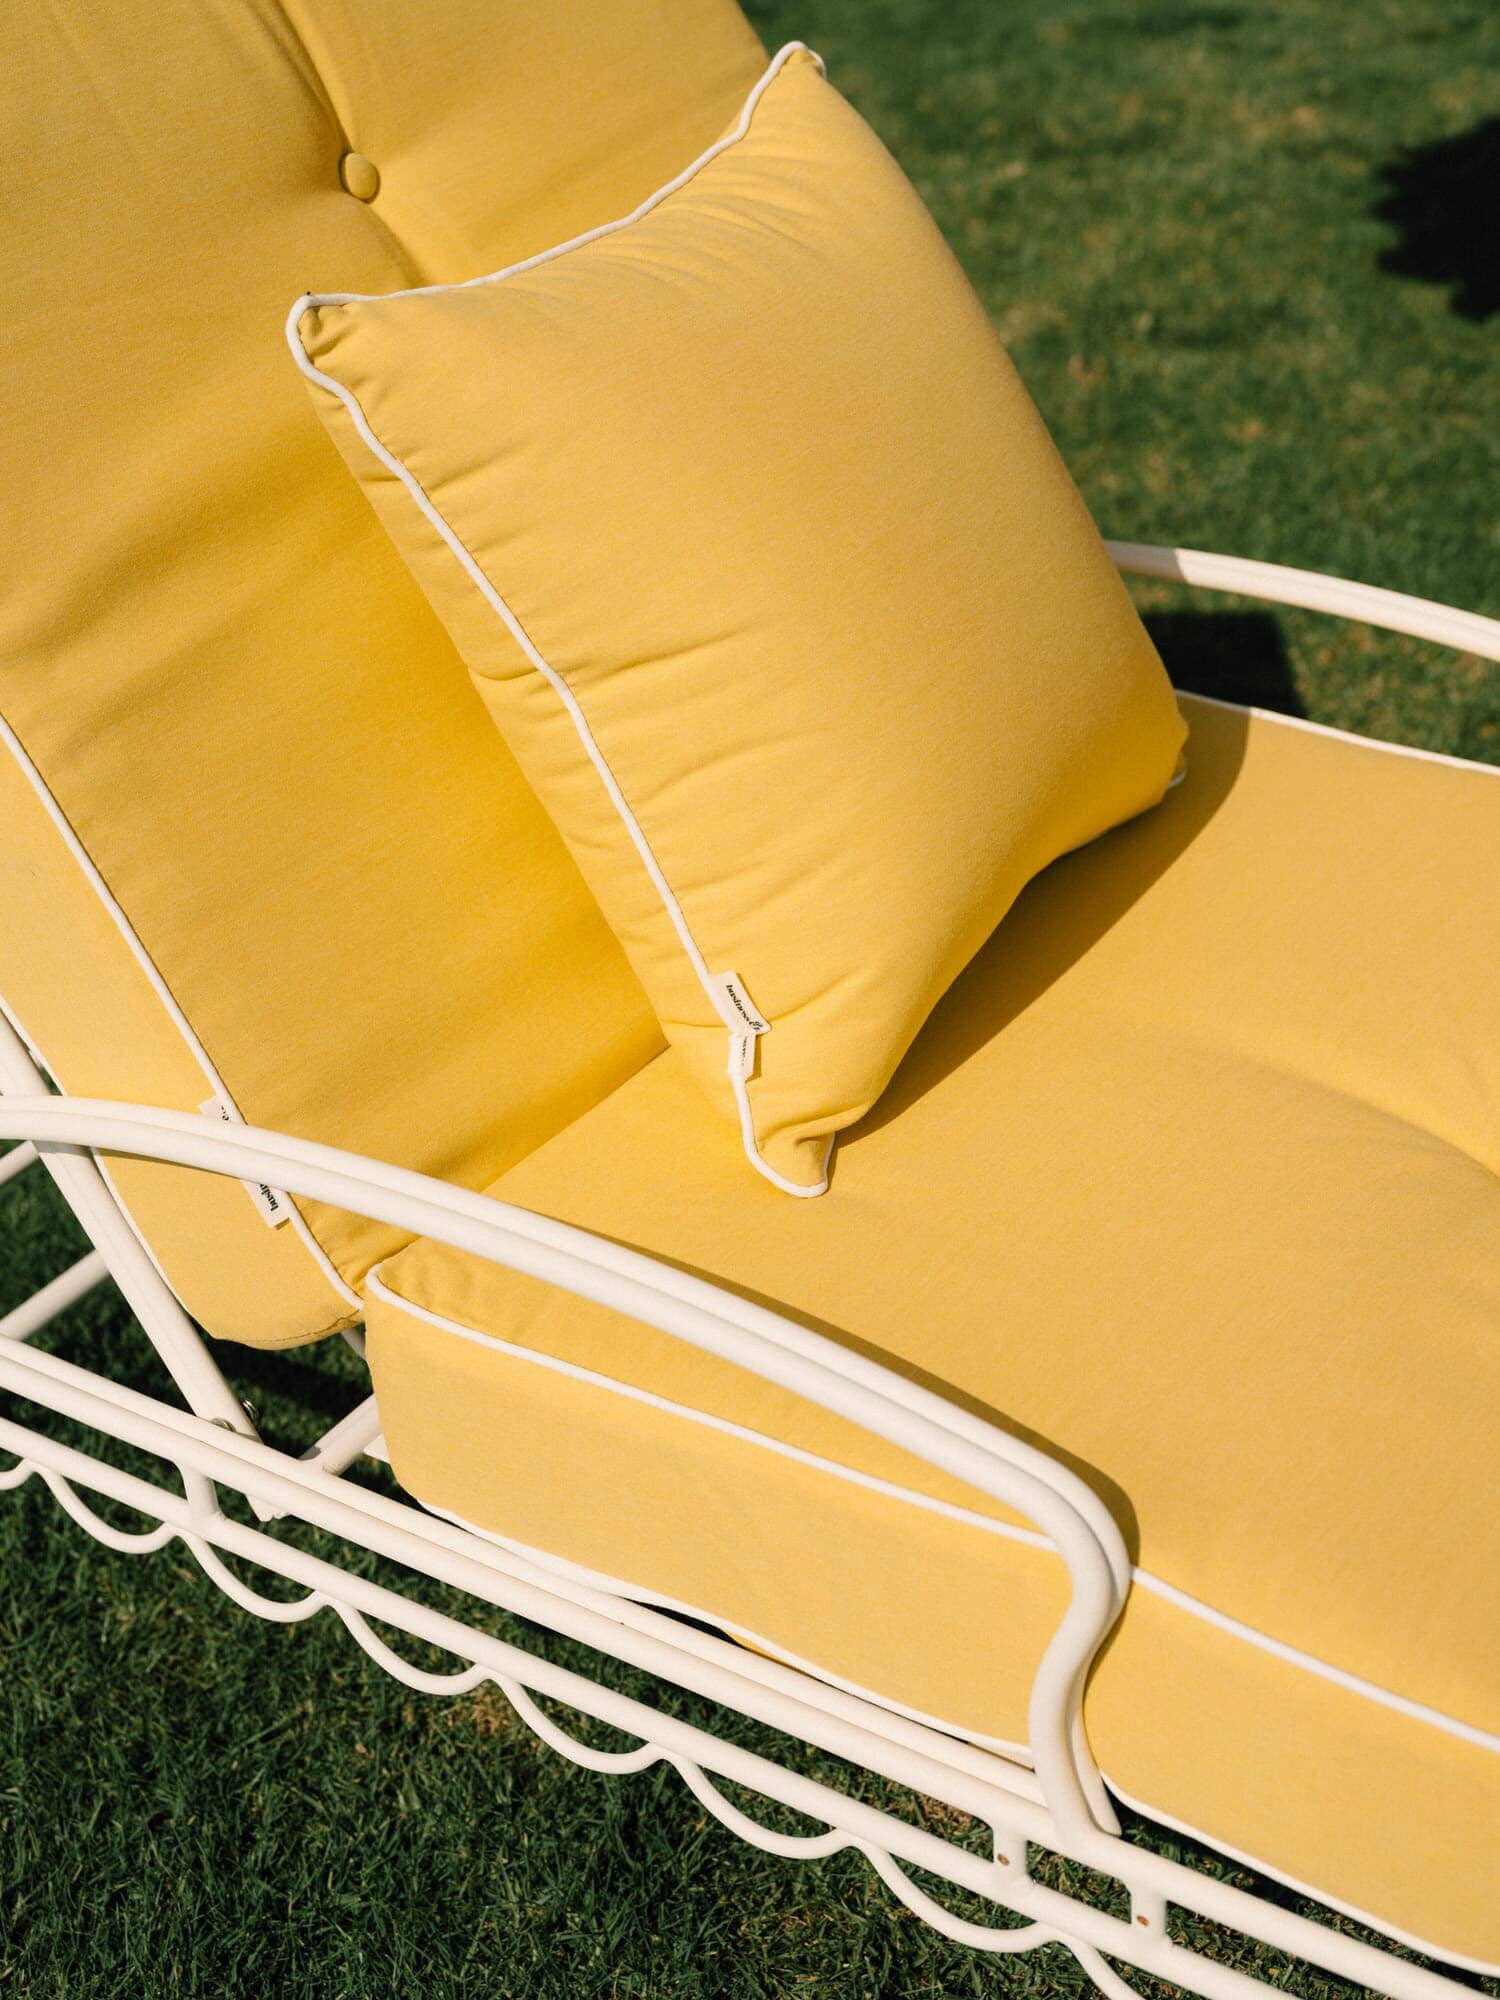 Riviera mimosa small throw pillow on an outdoor sun lounger